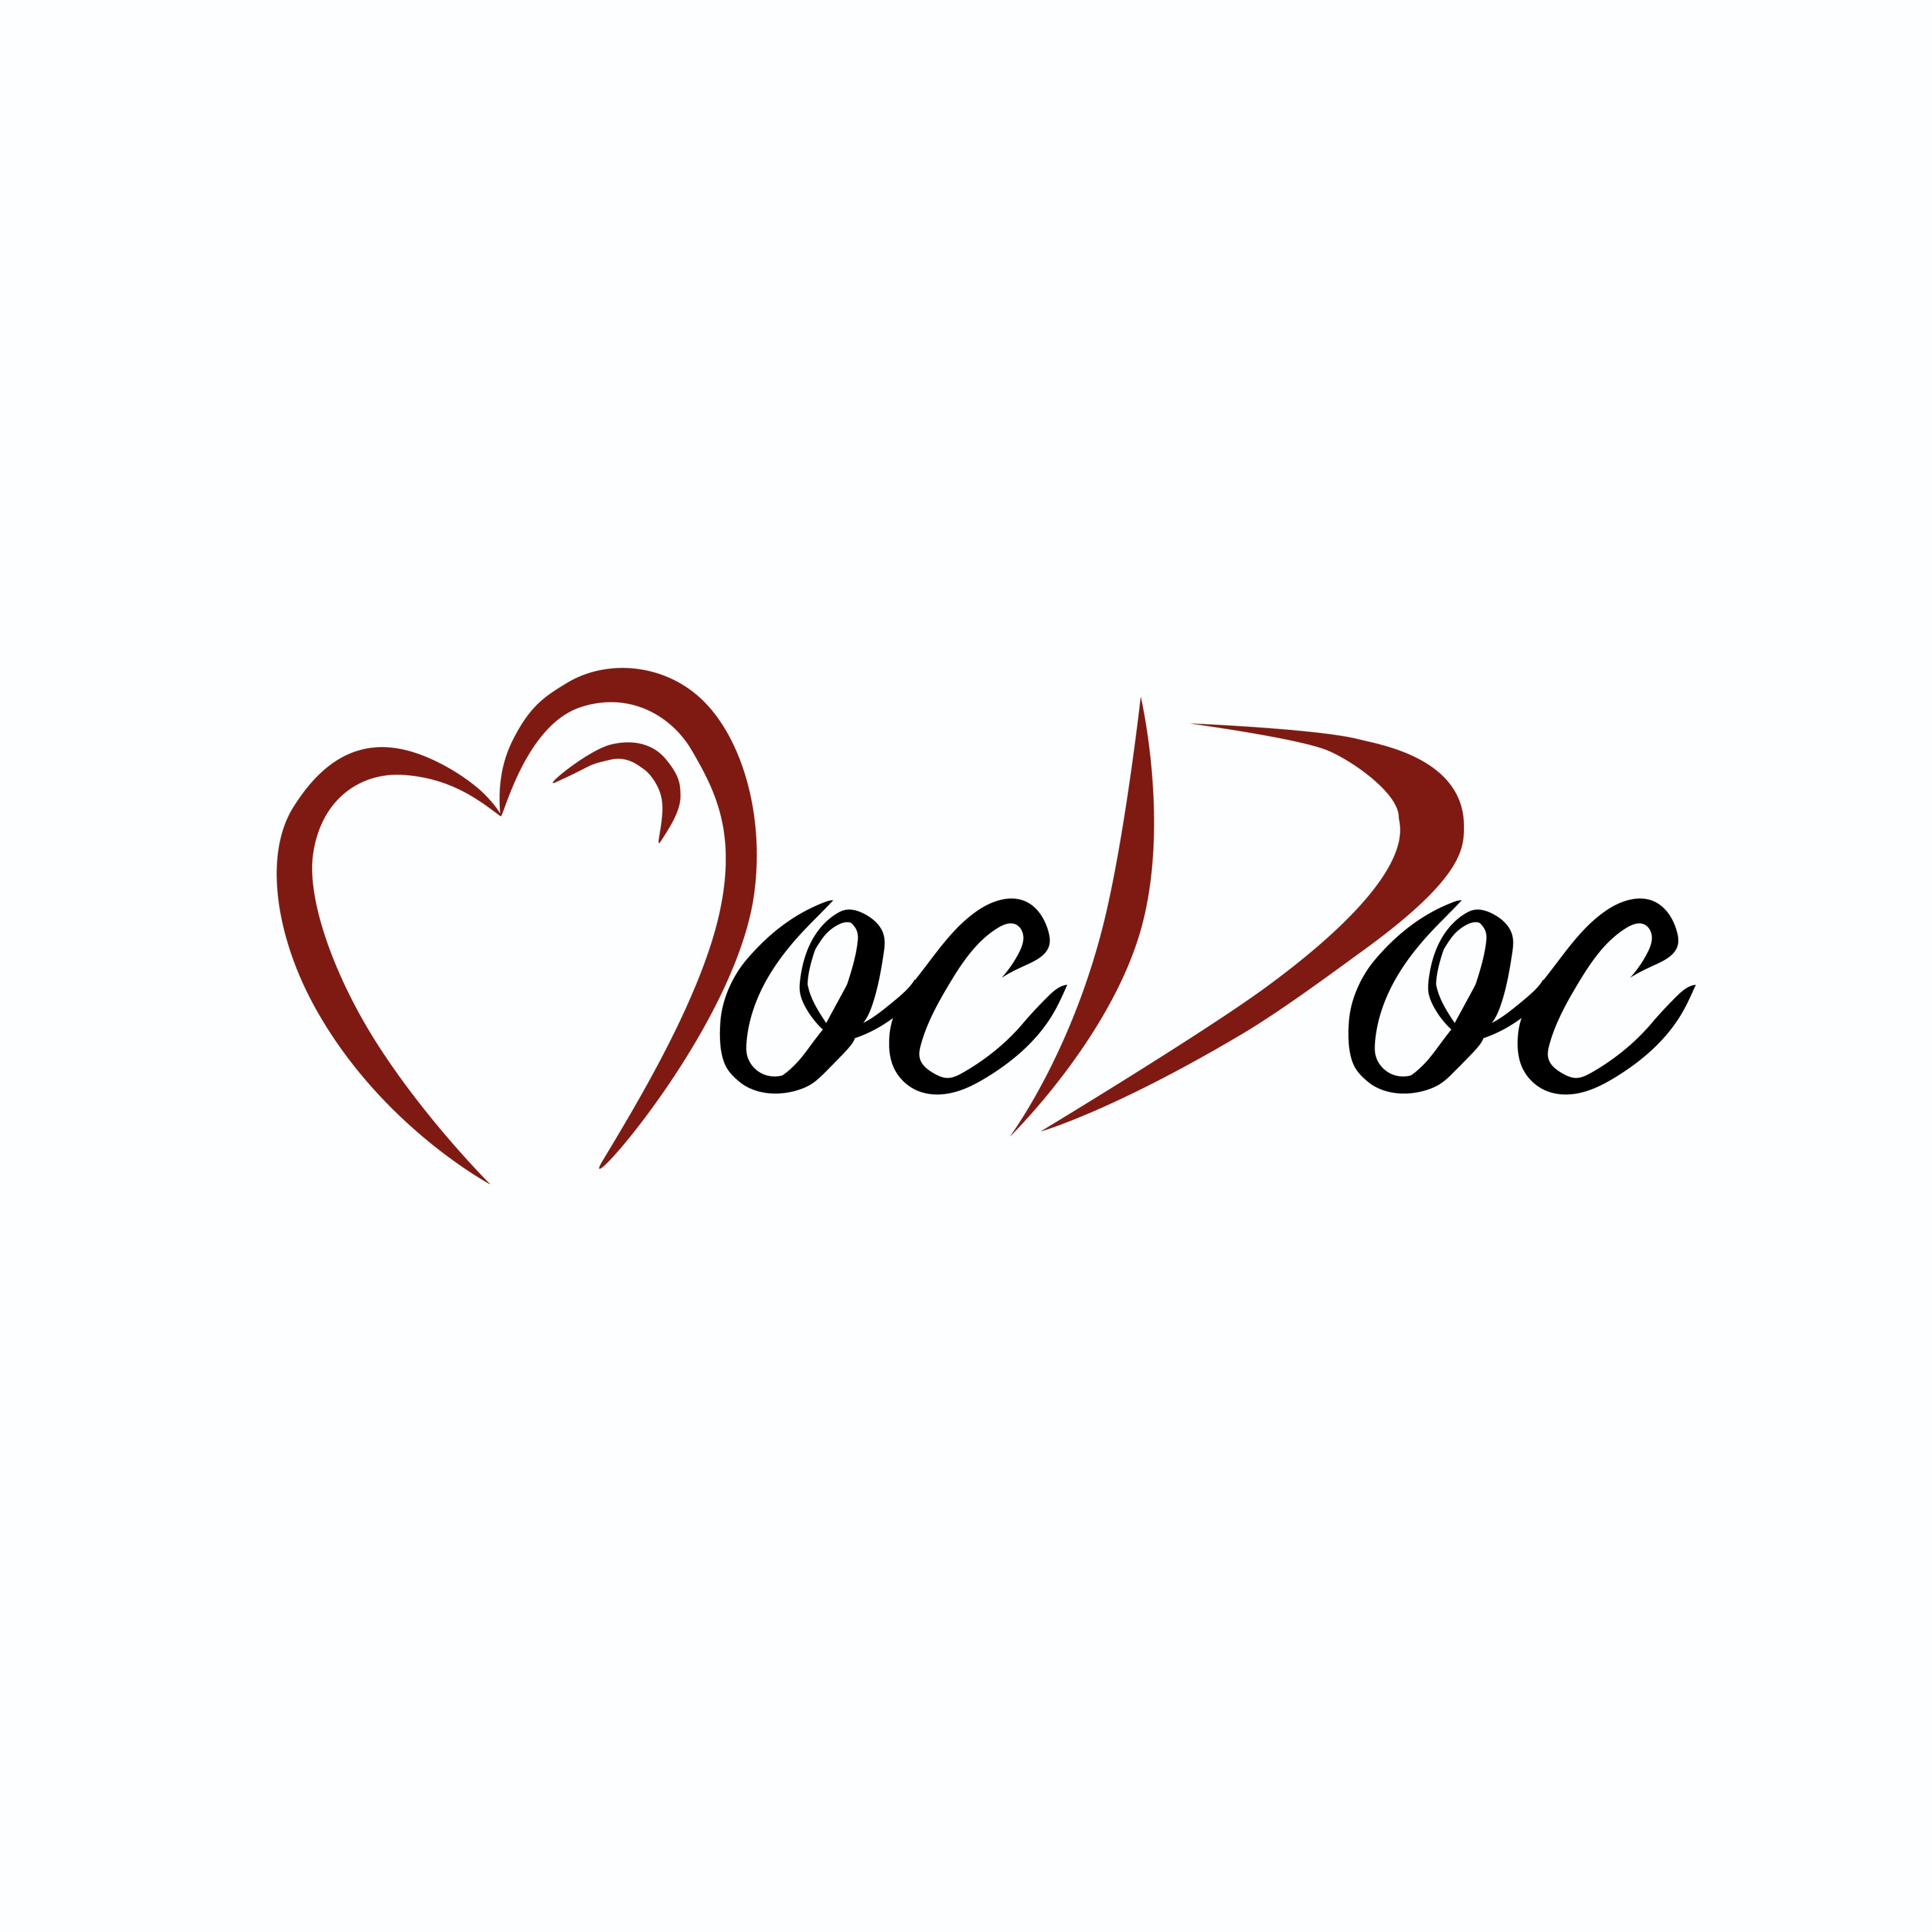 MocDoc|Diagnostic centre|Medical Services